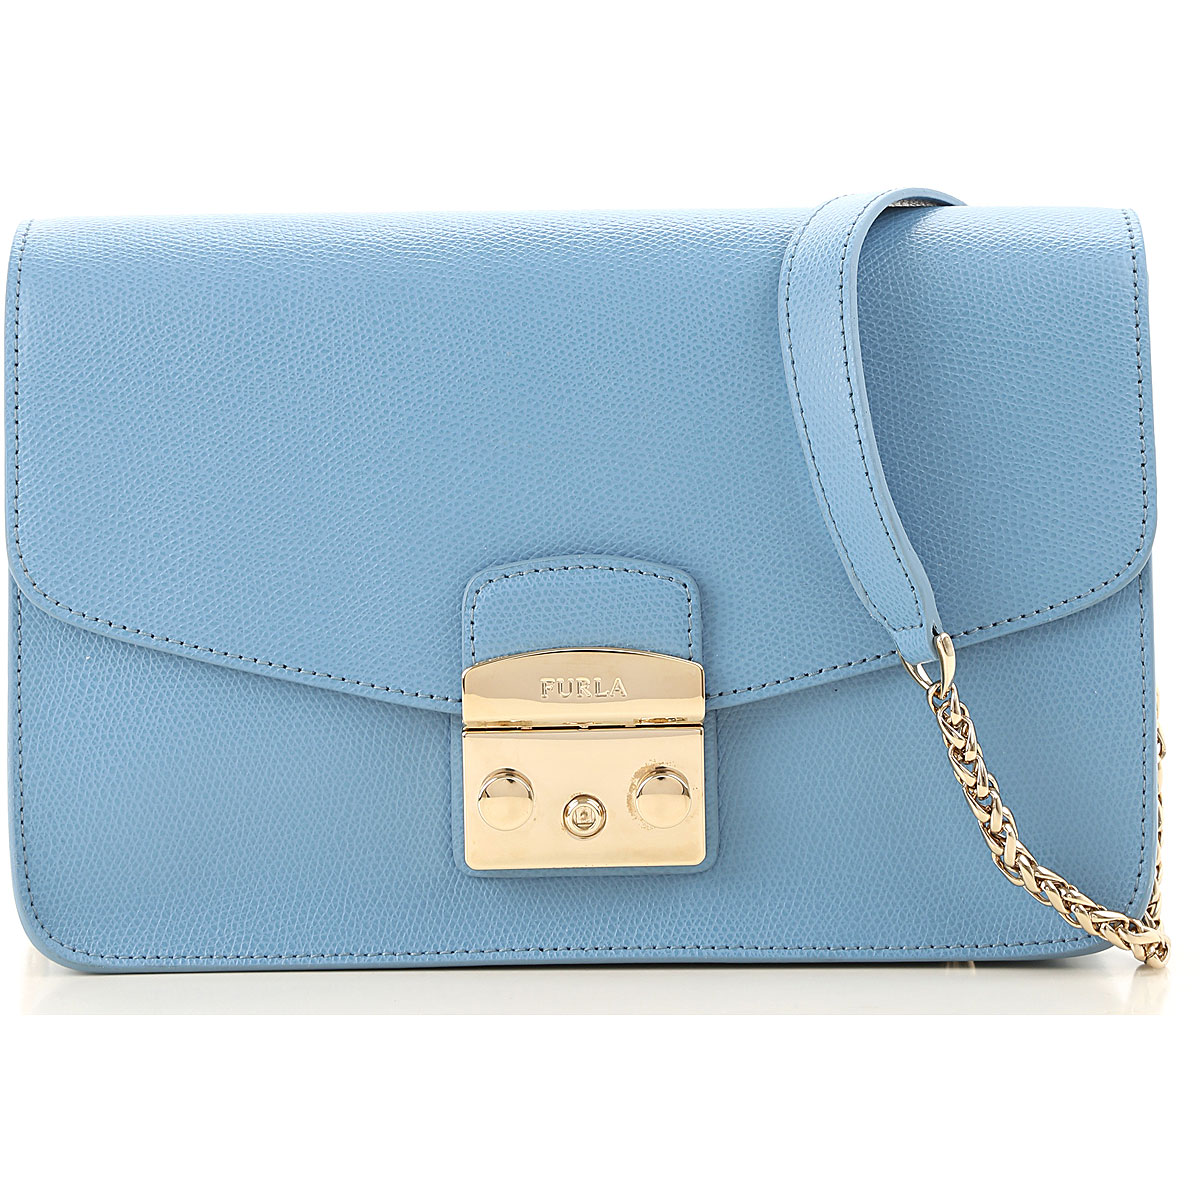 Handbags Furla, Style code: 972390-metropolis-azzu.veronica